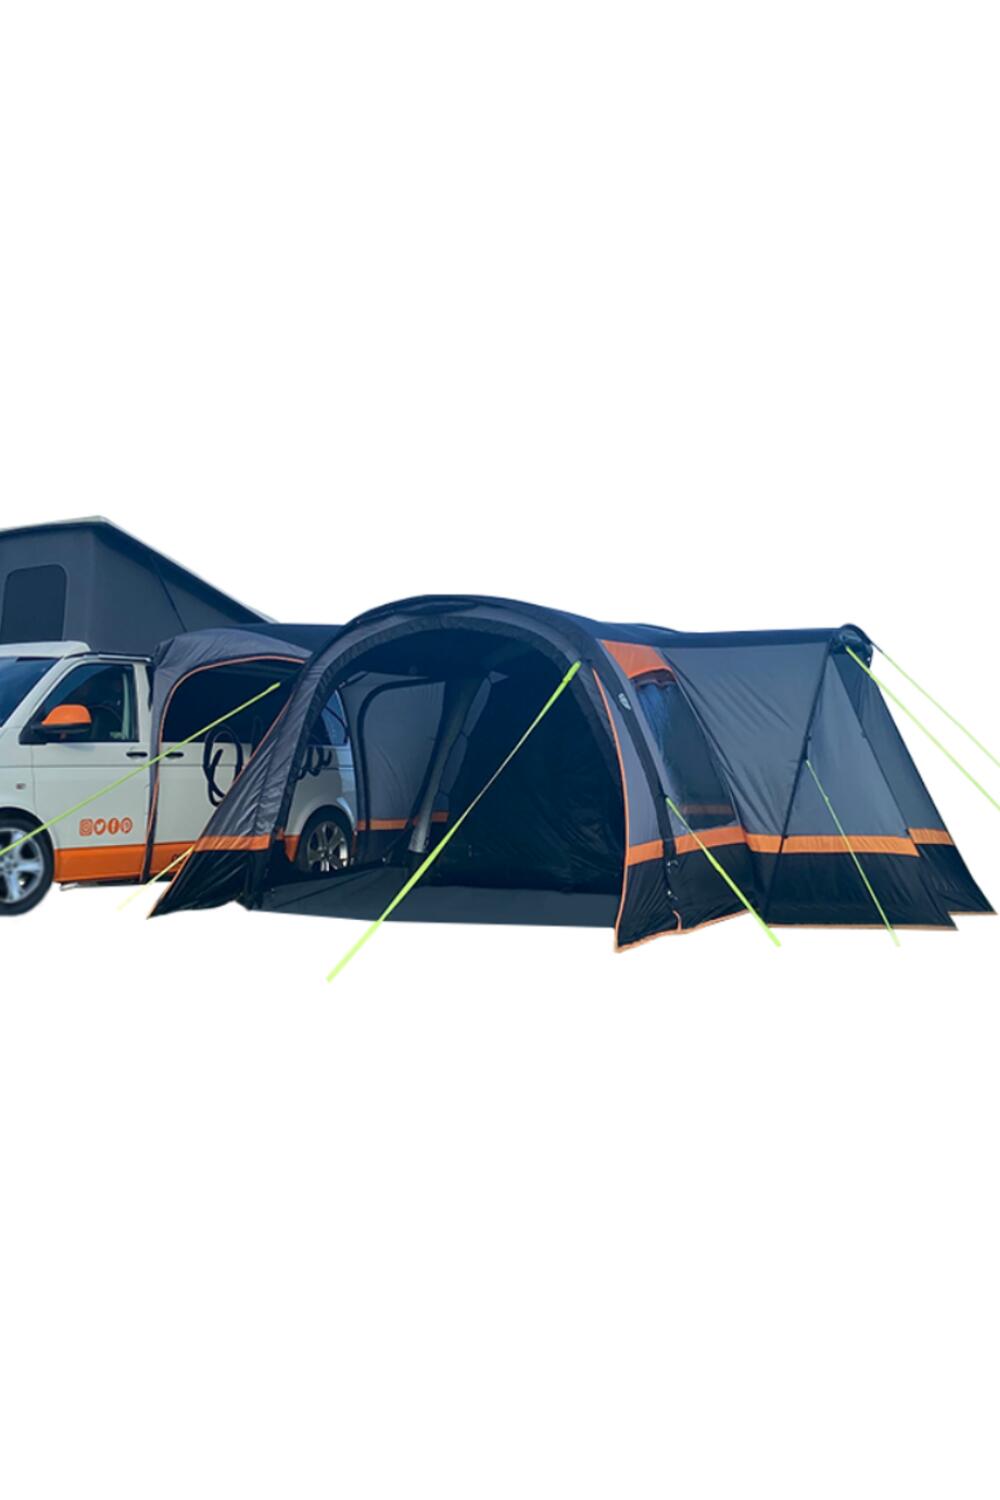 OLPRO OLPRO Cocoon Breeze v2 Campervan Awning (Charcoal/Orange)